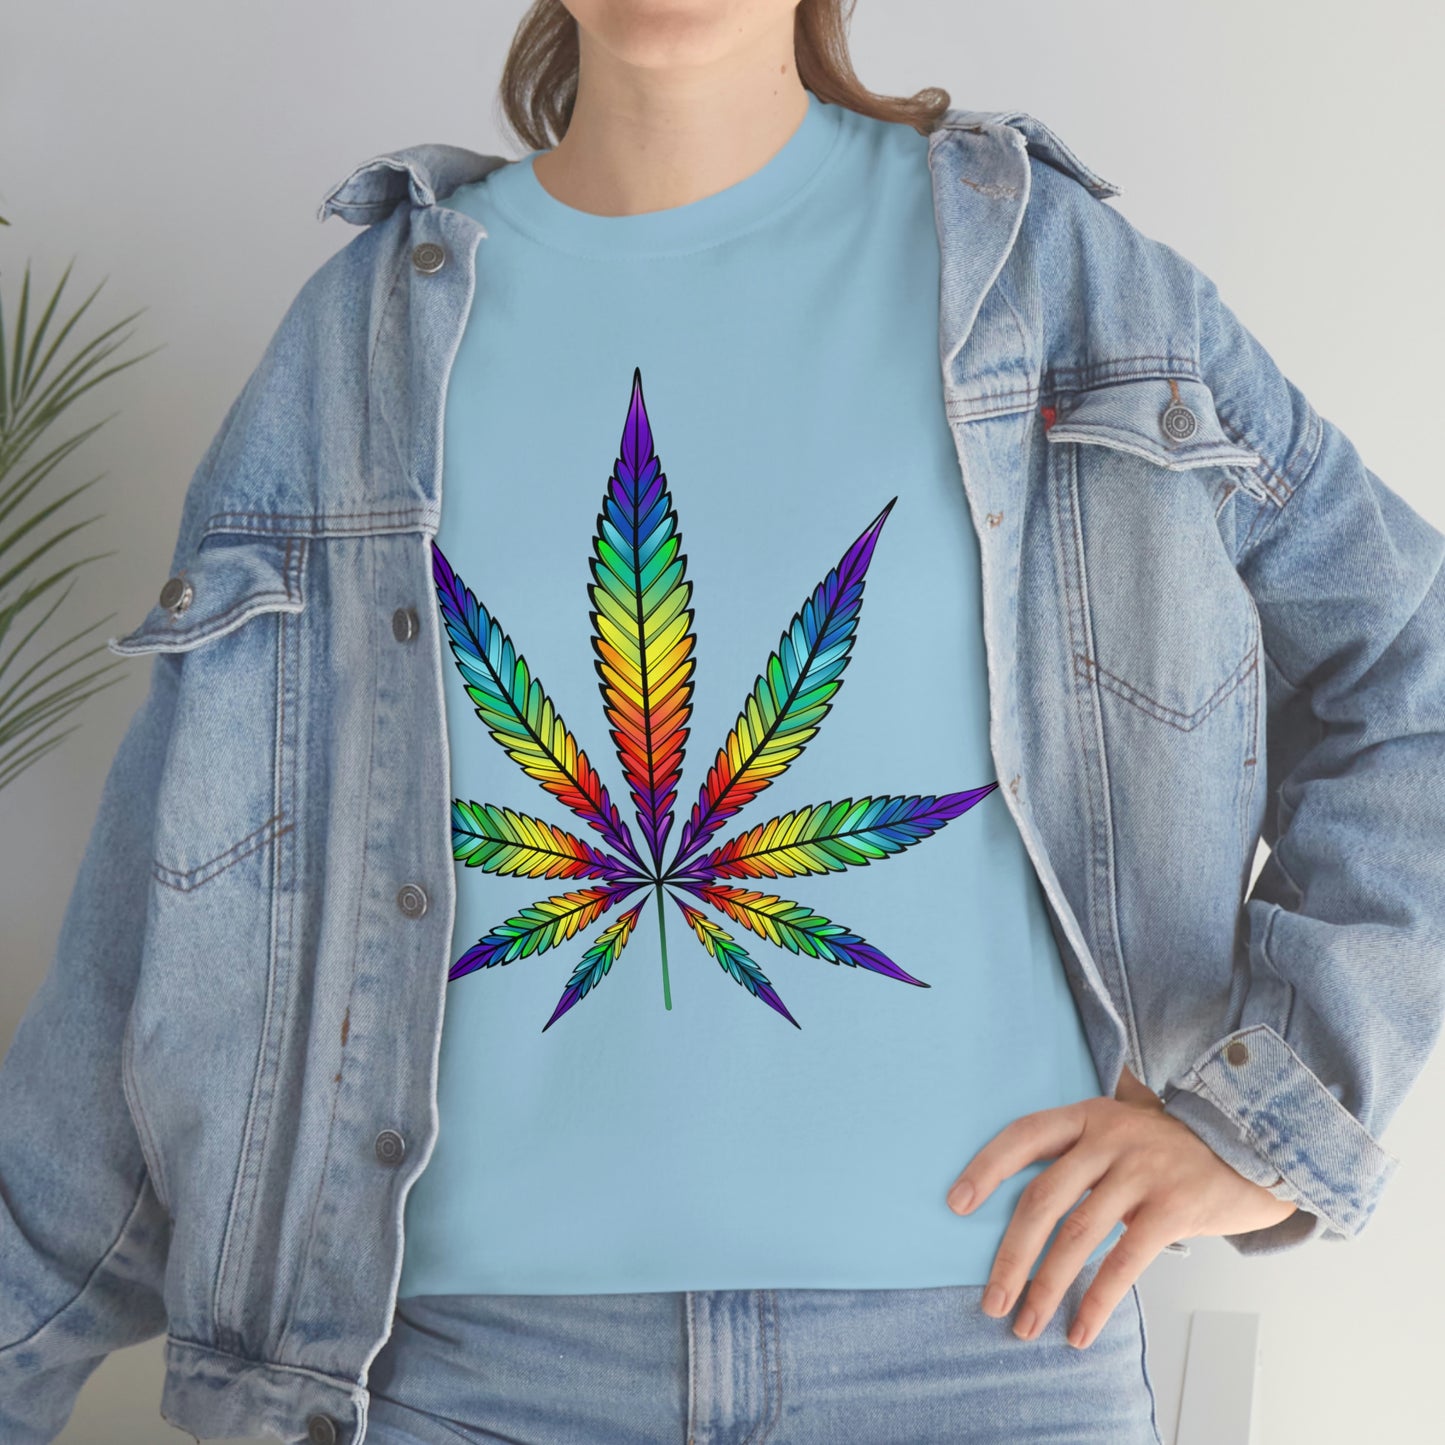 A woman wearing a Rainbow Cannabis Leaf Tee